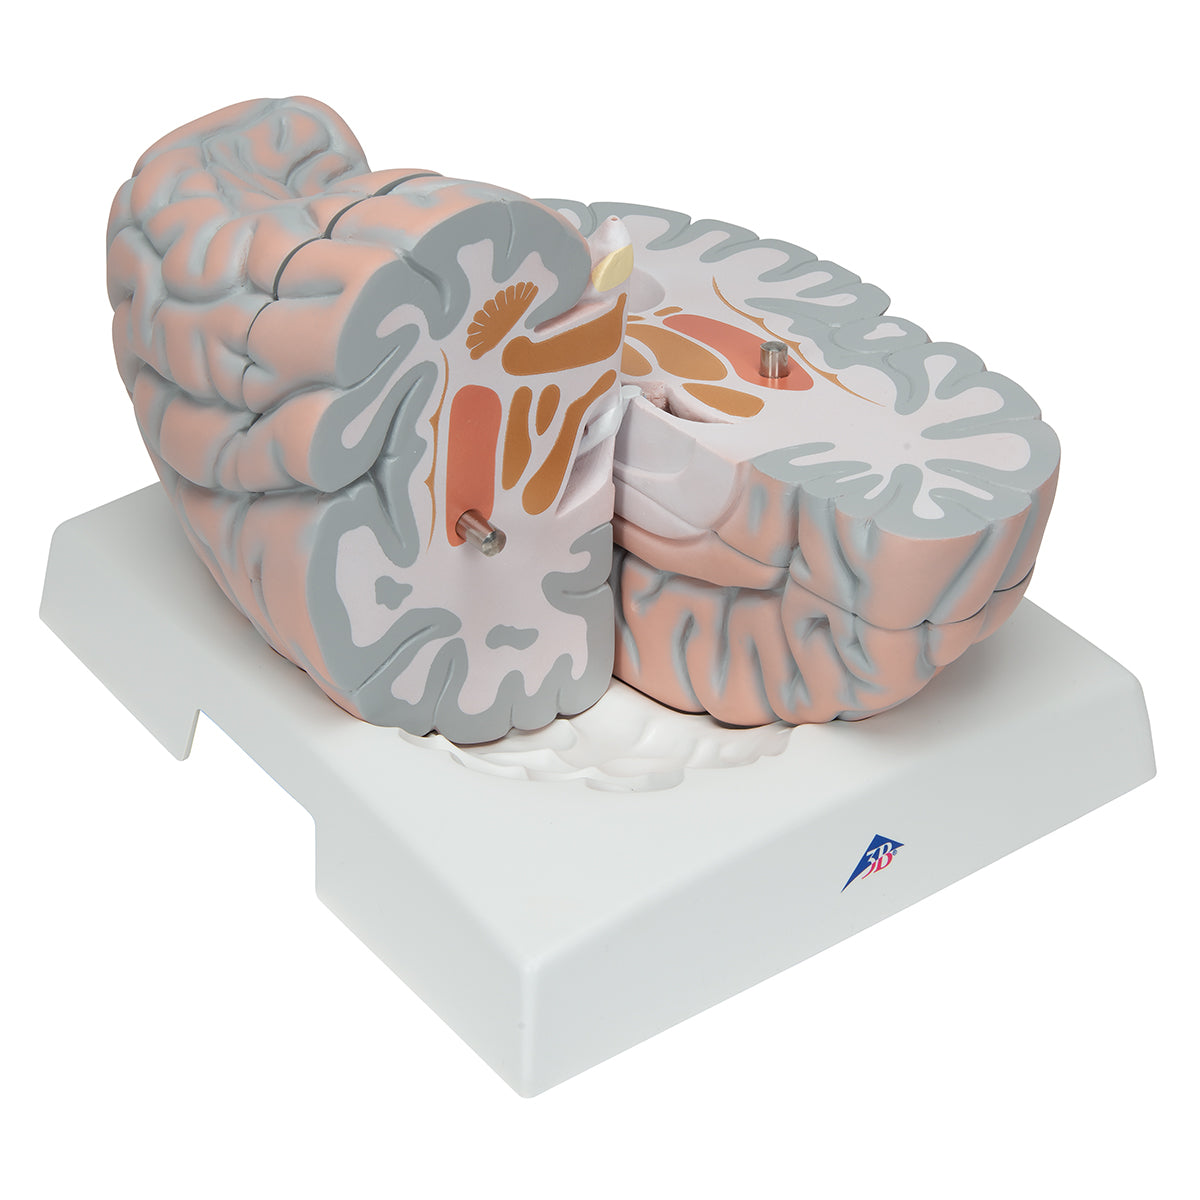 Giant brain model in 14 parts